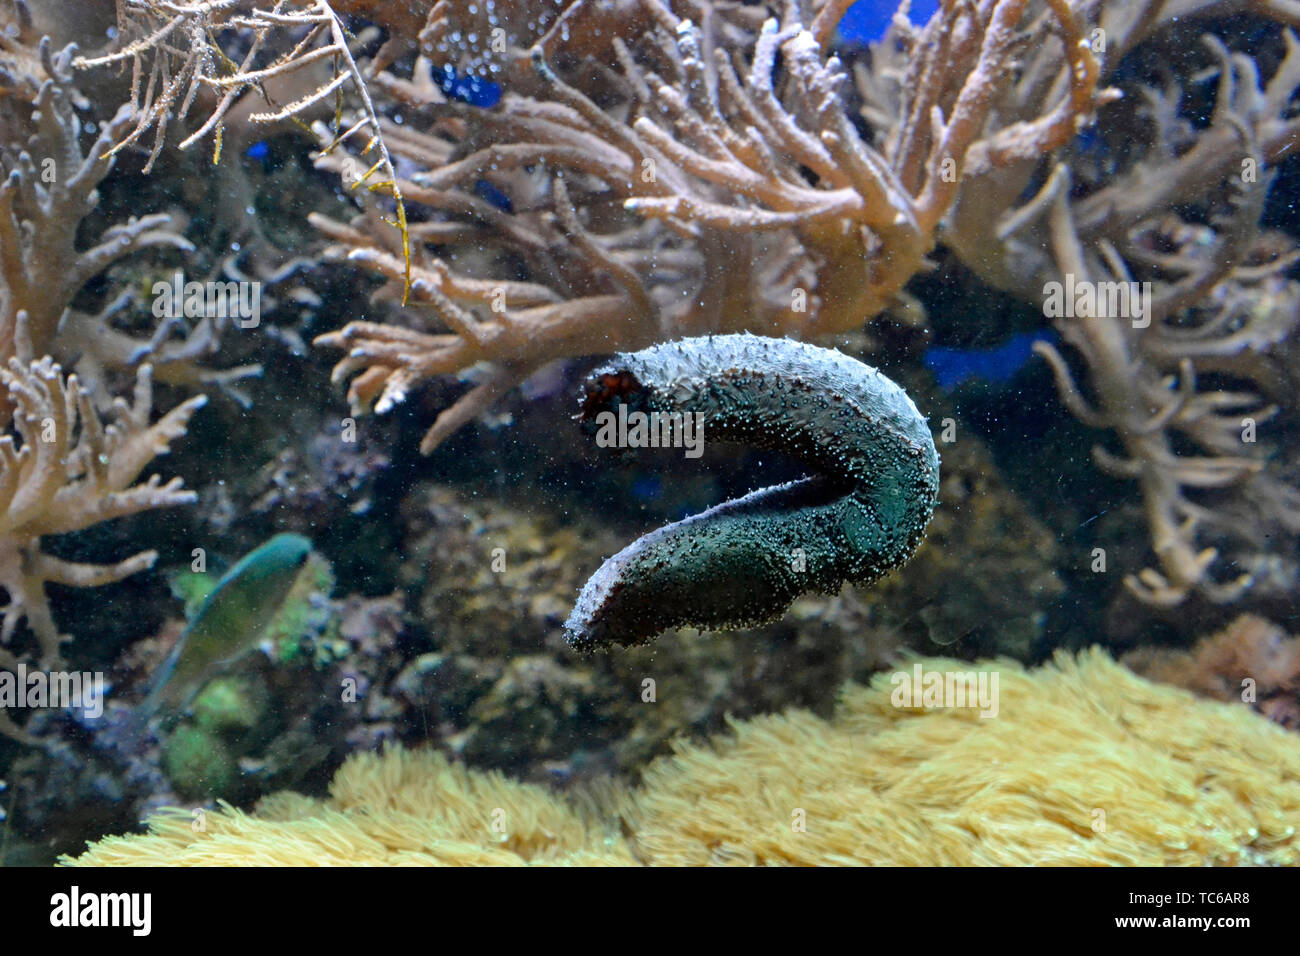 Black long sea cucumber (Holothuria leucospilota) among coral reefs at London Zoo Aquarium, ZSL London Zoo, London, UK Stock Photo